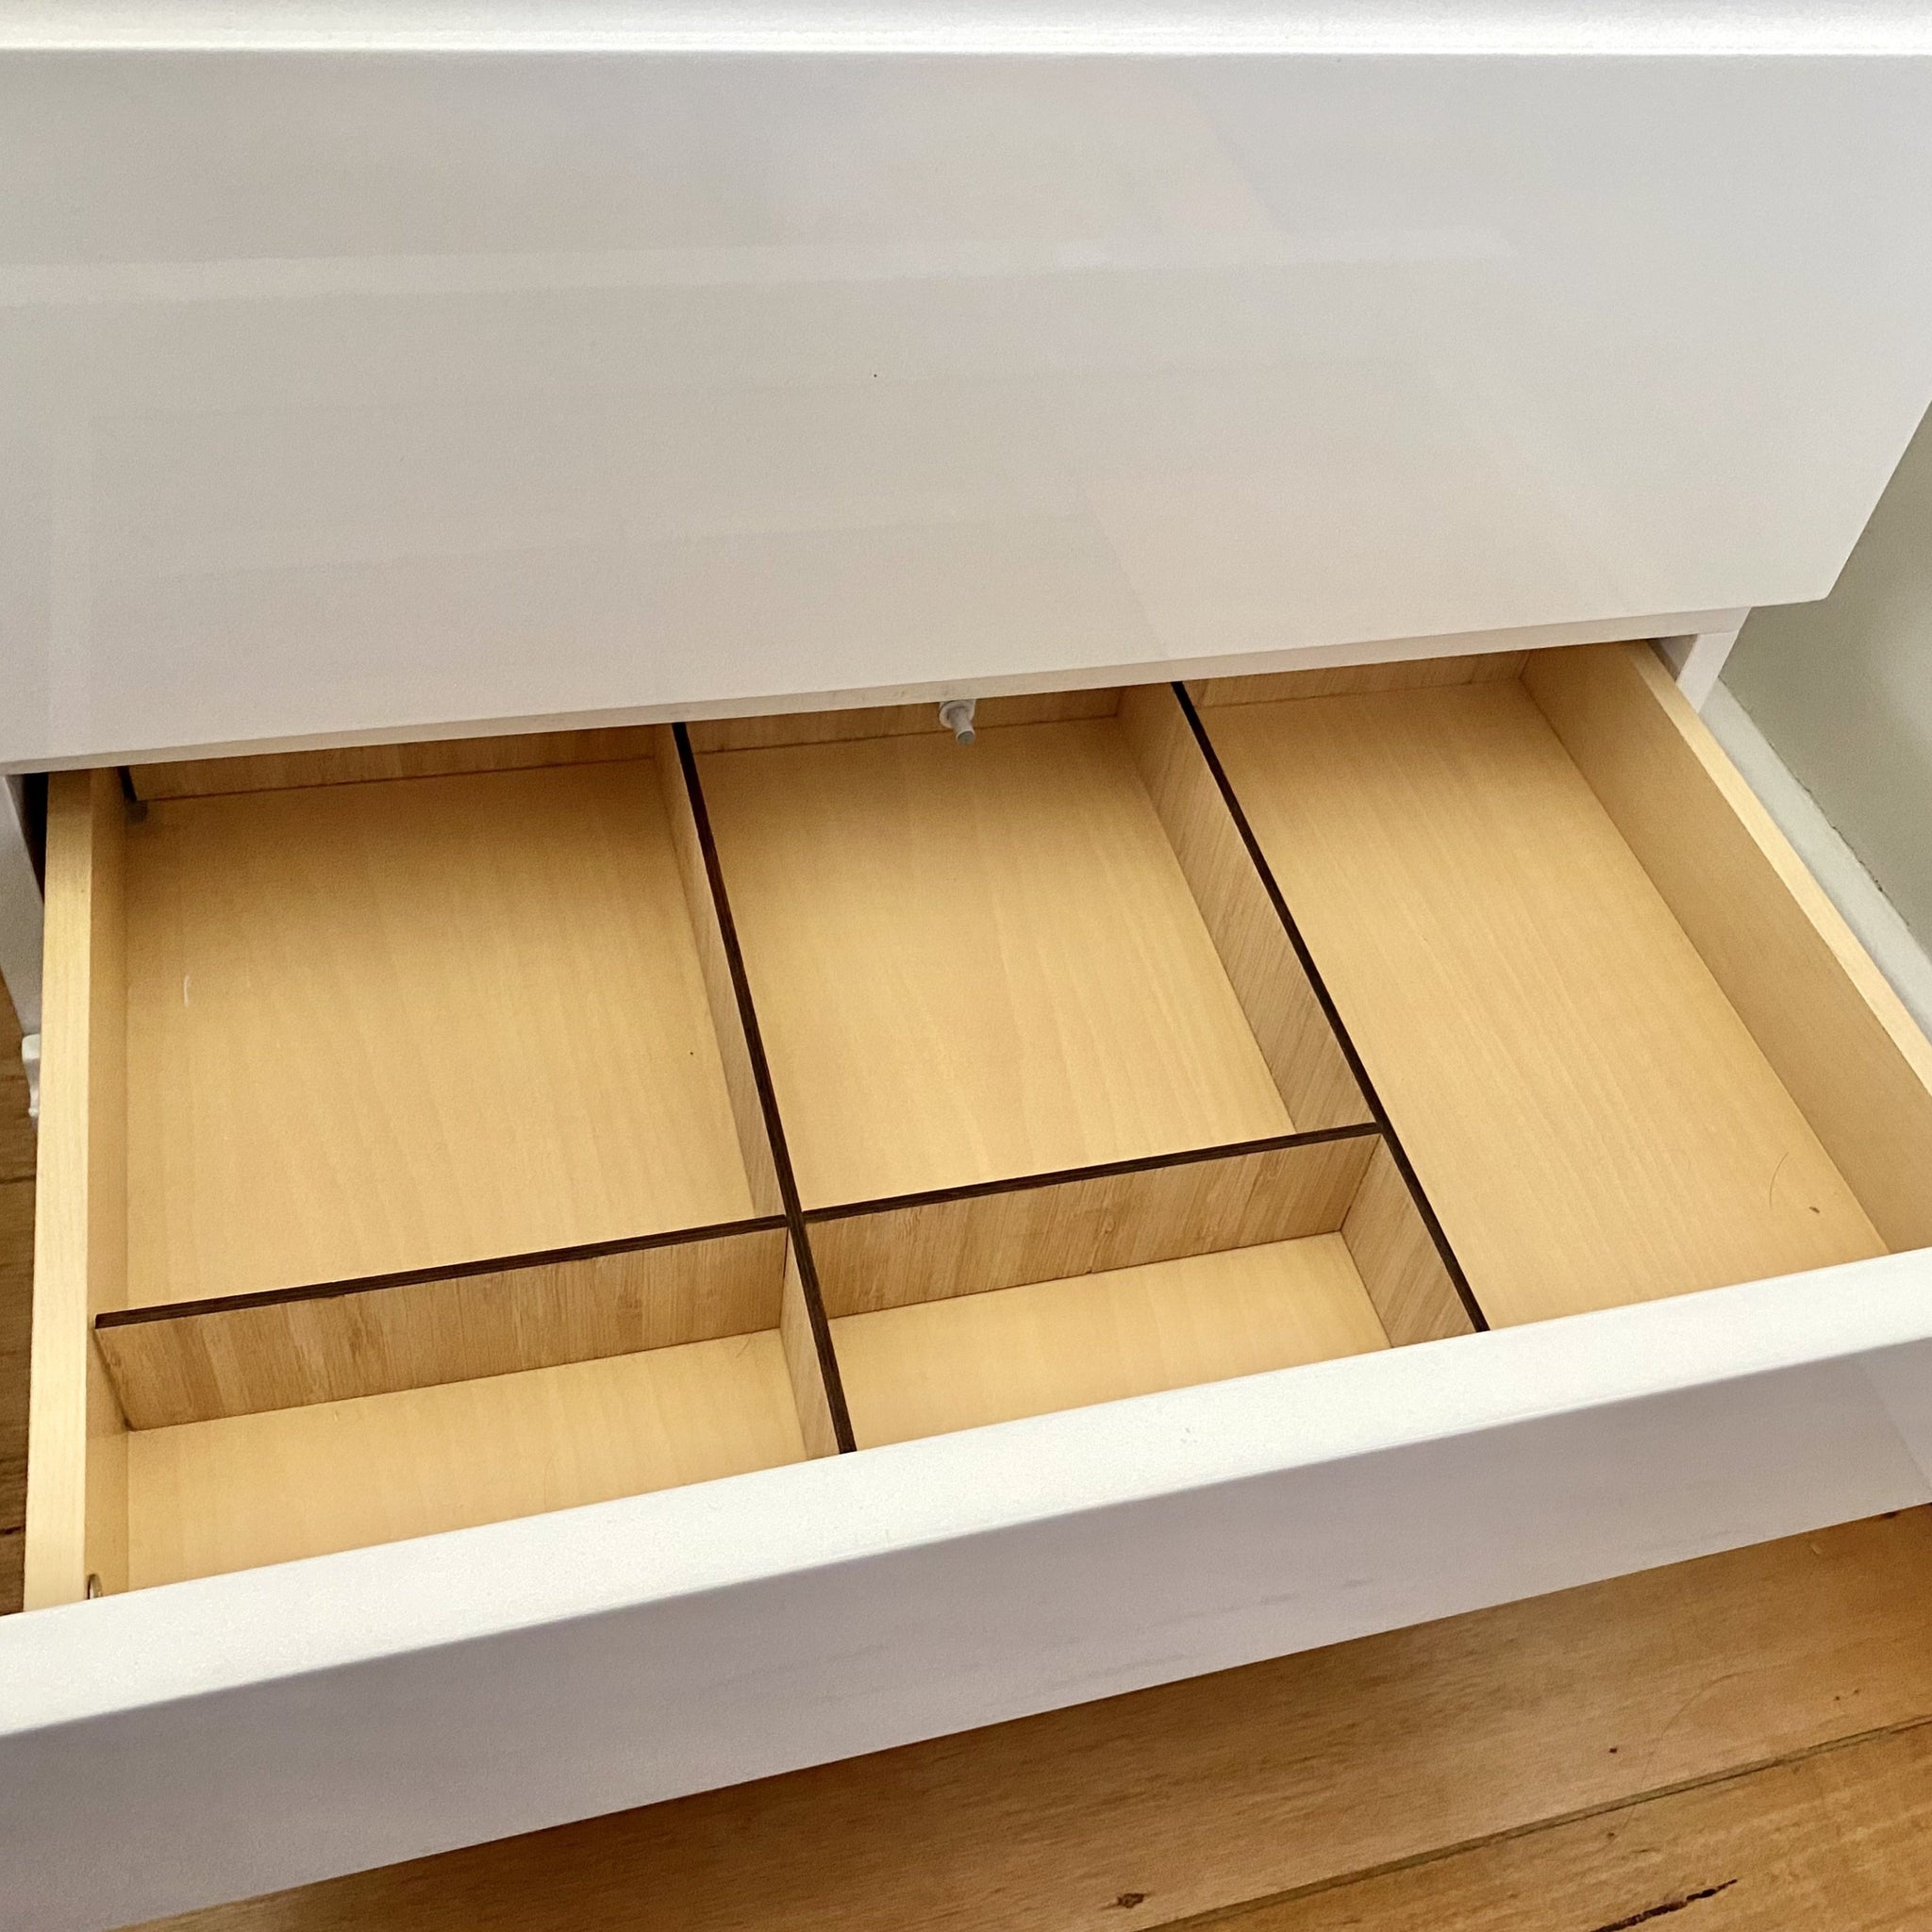 drawer organiser divider insert organizer bamboo- tidy.af